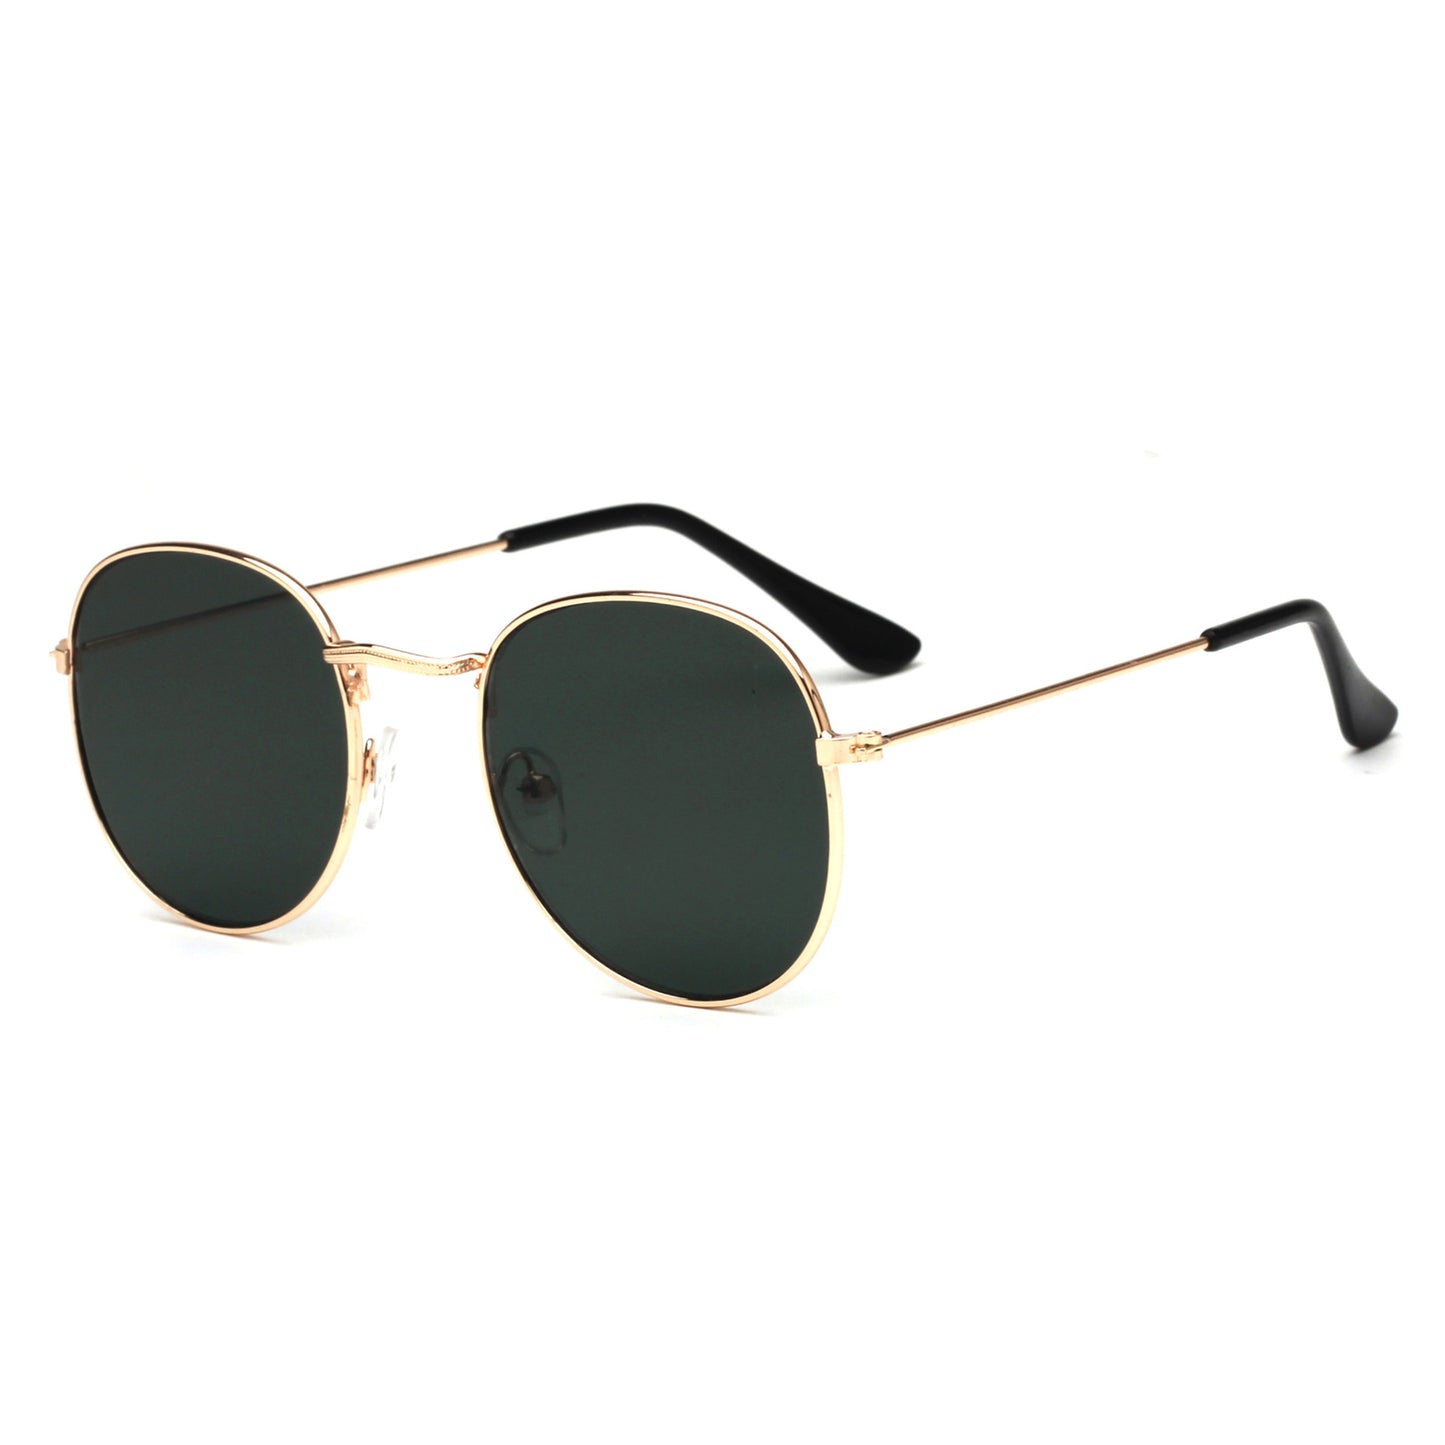 Trendy Metallic Sunglasses